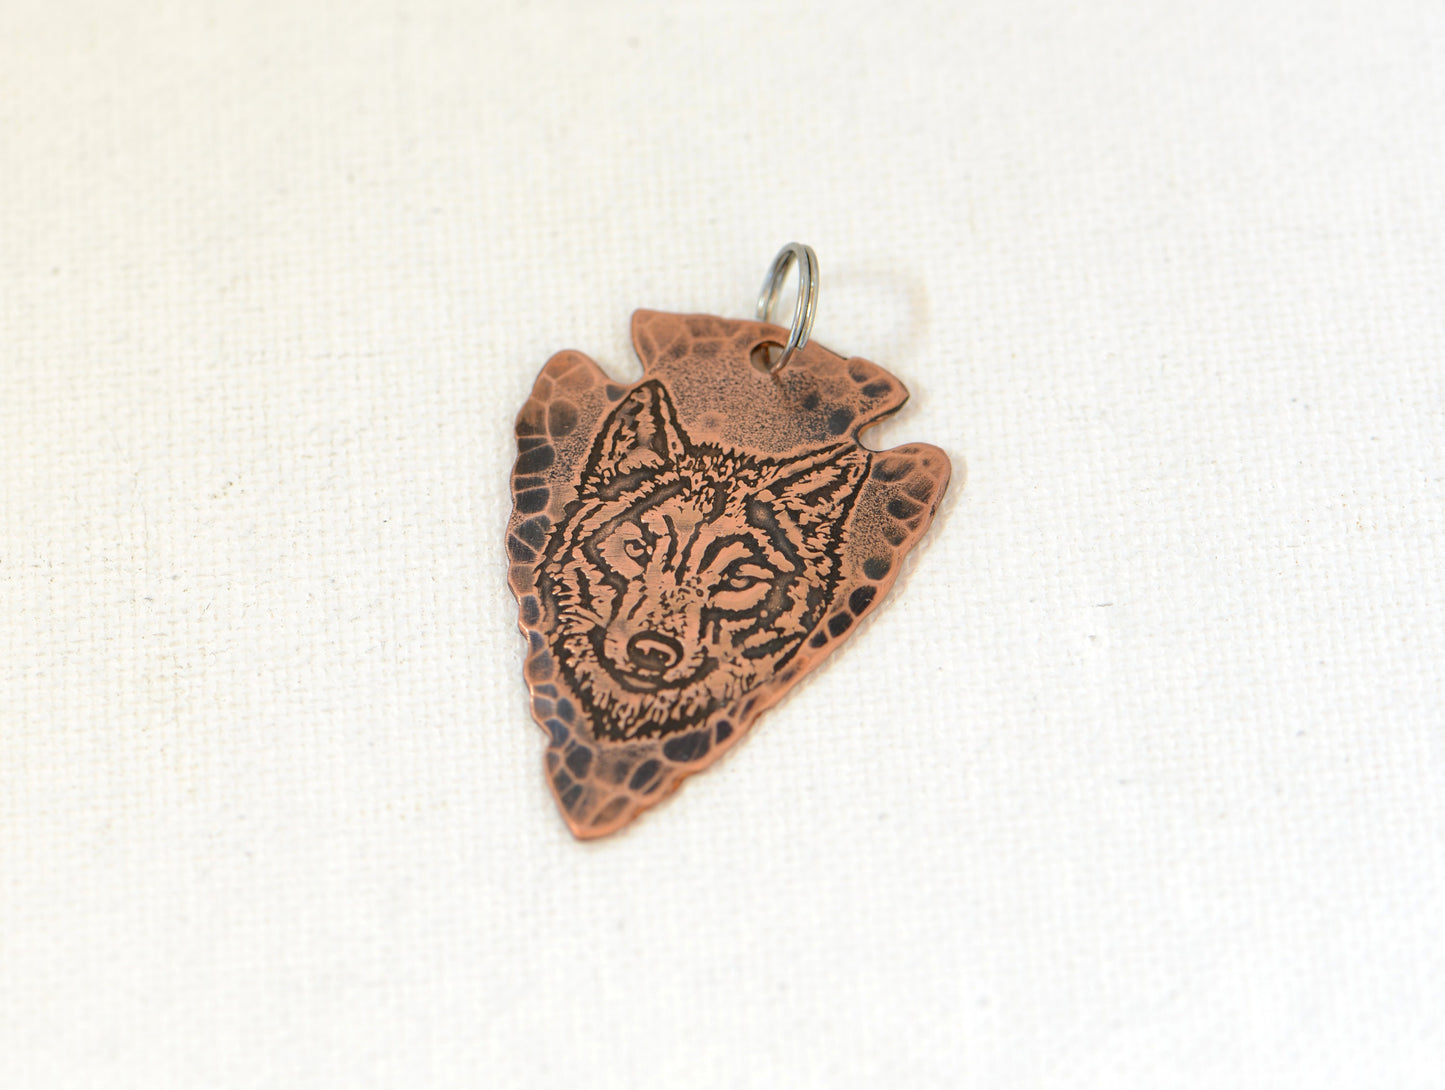 Rustic copper arrowhead pendant with wolf design